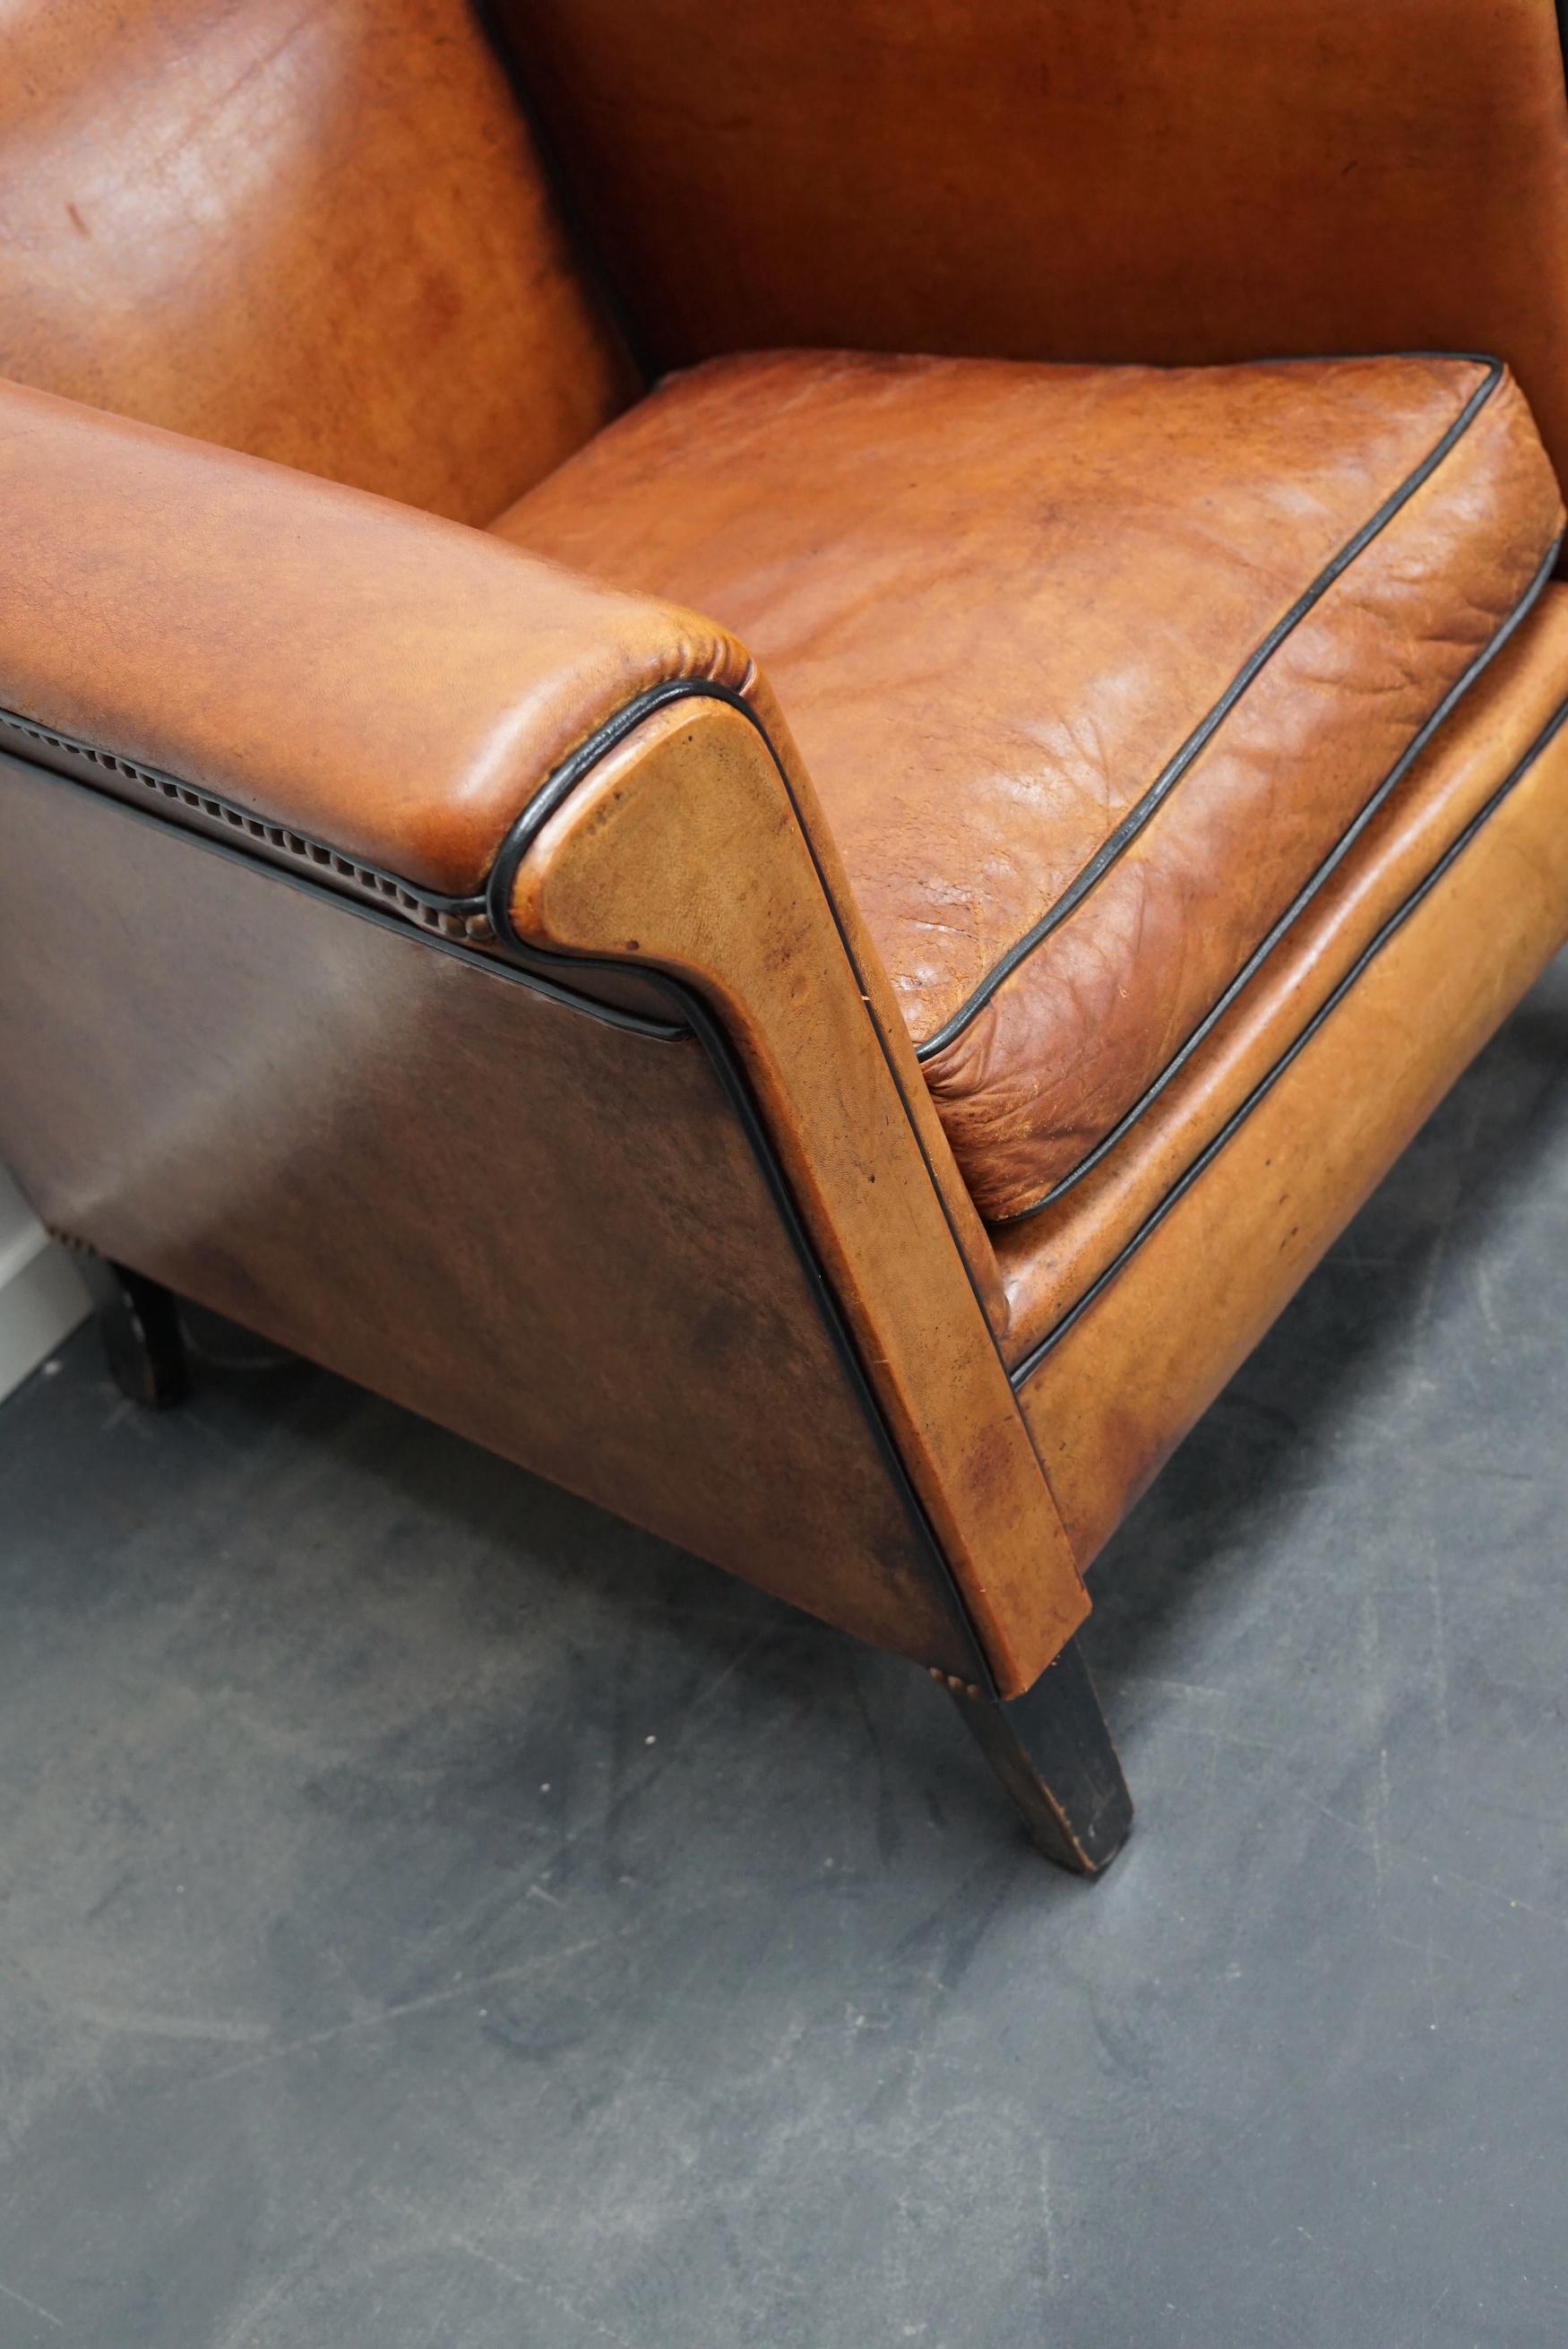 Vintage Dutch Cognac Leather Club Chairs Art Deco Style, Set of 2 10